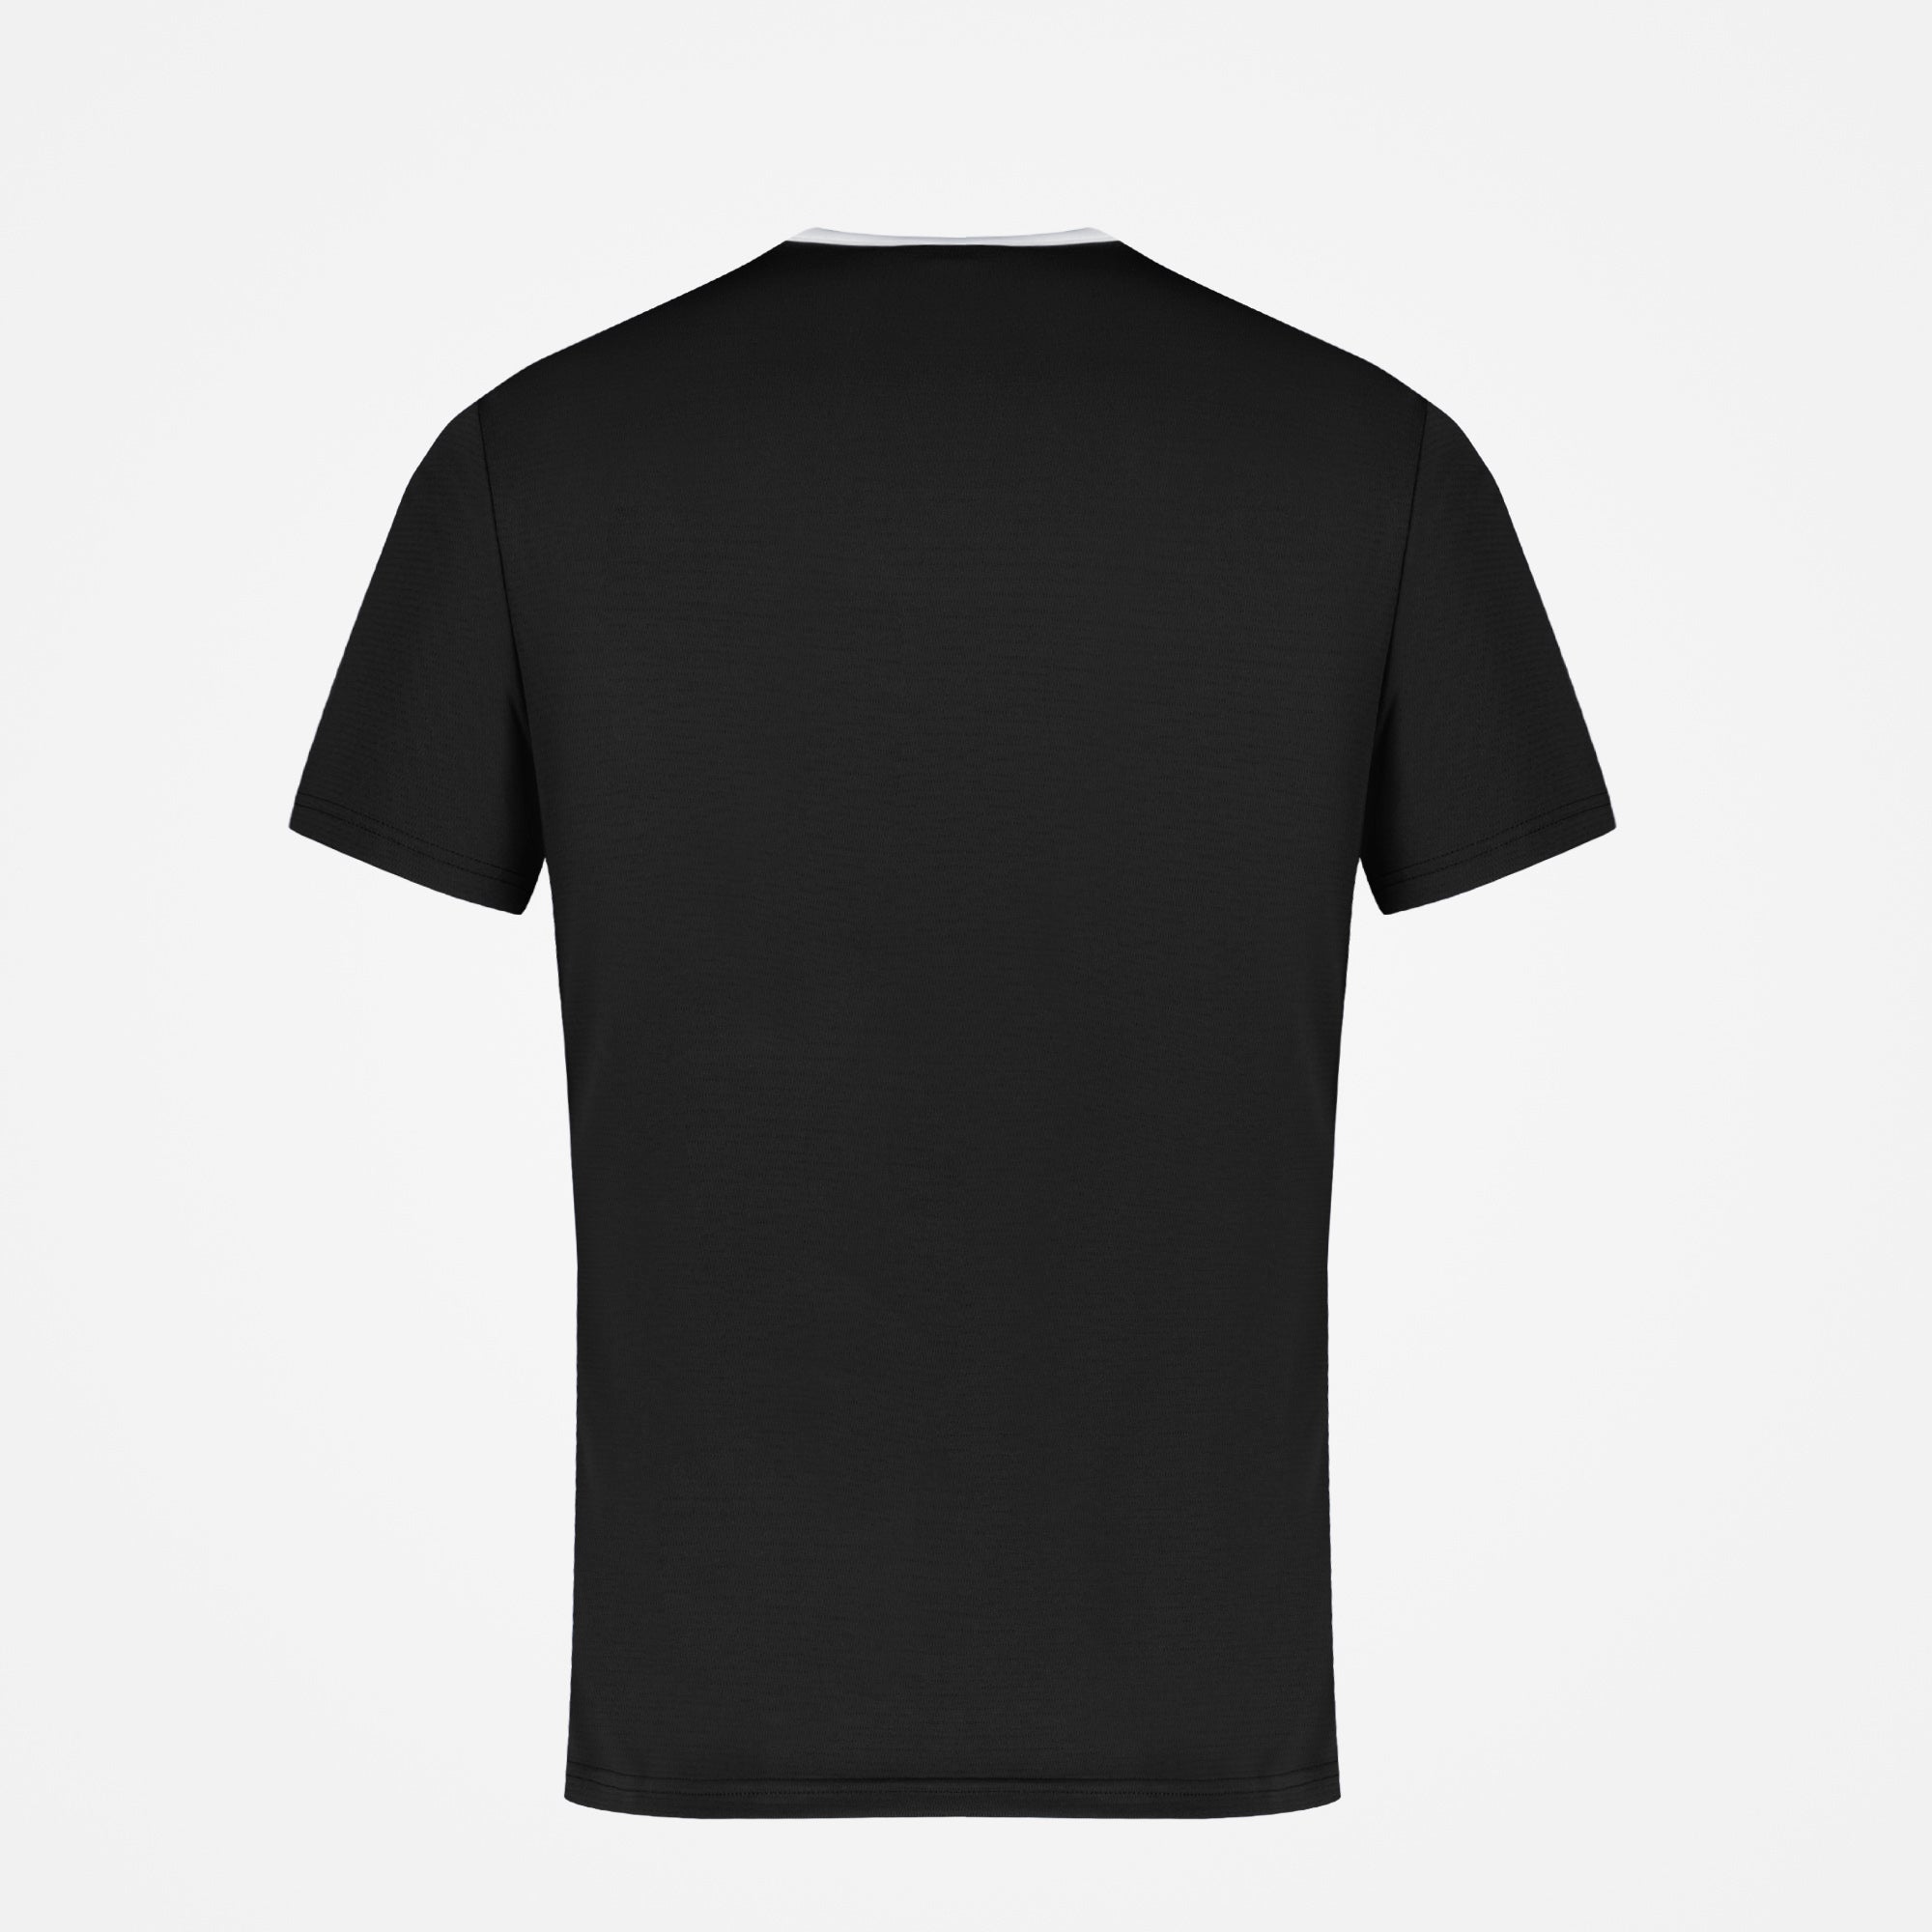 2220019-N°1 TRAINING Tee SS M black | T-shirt Homme